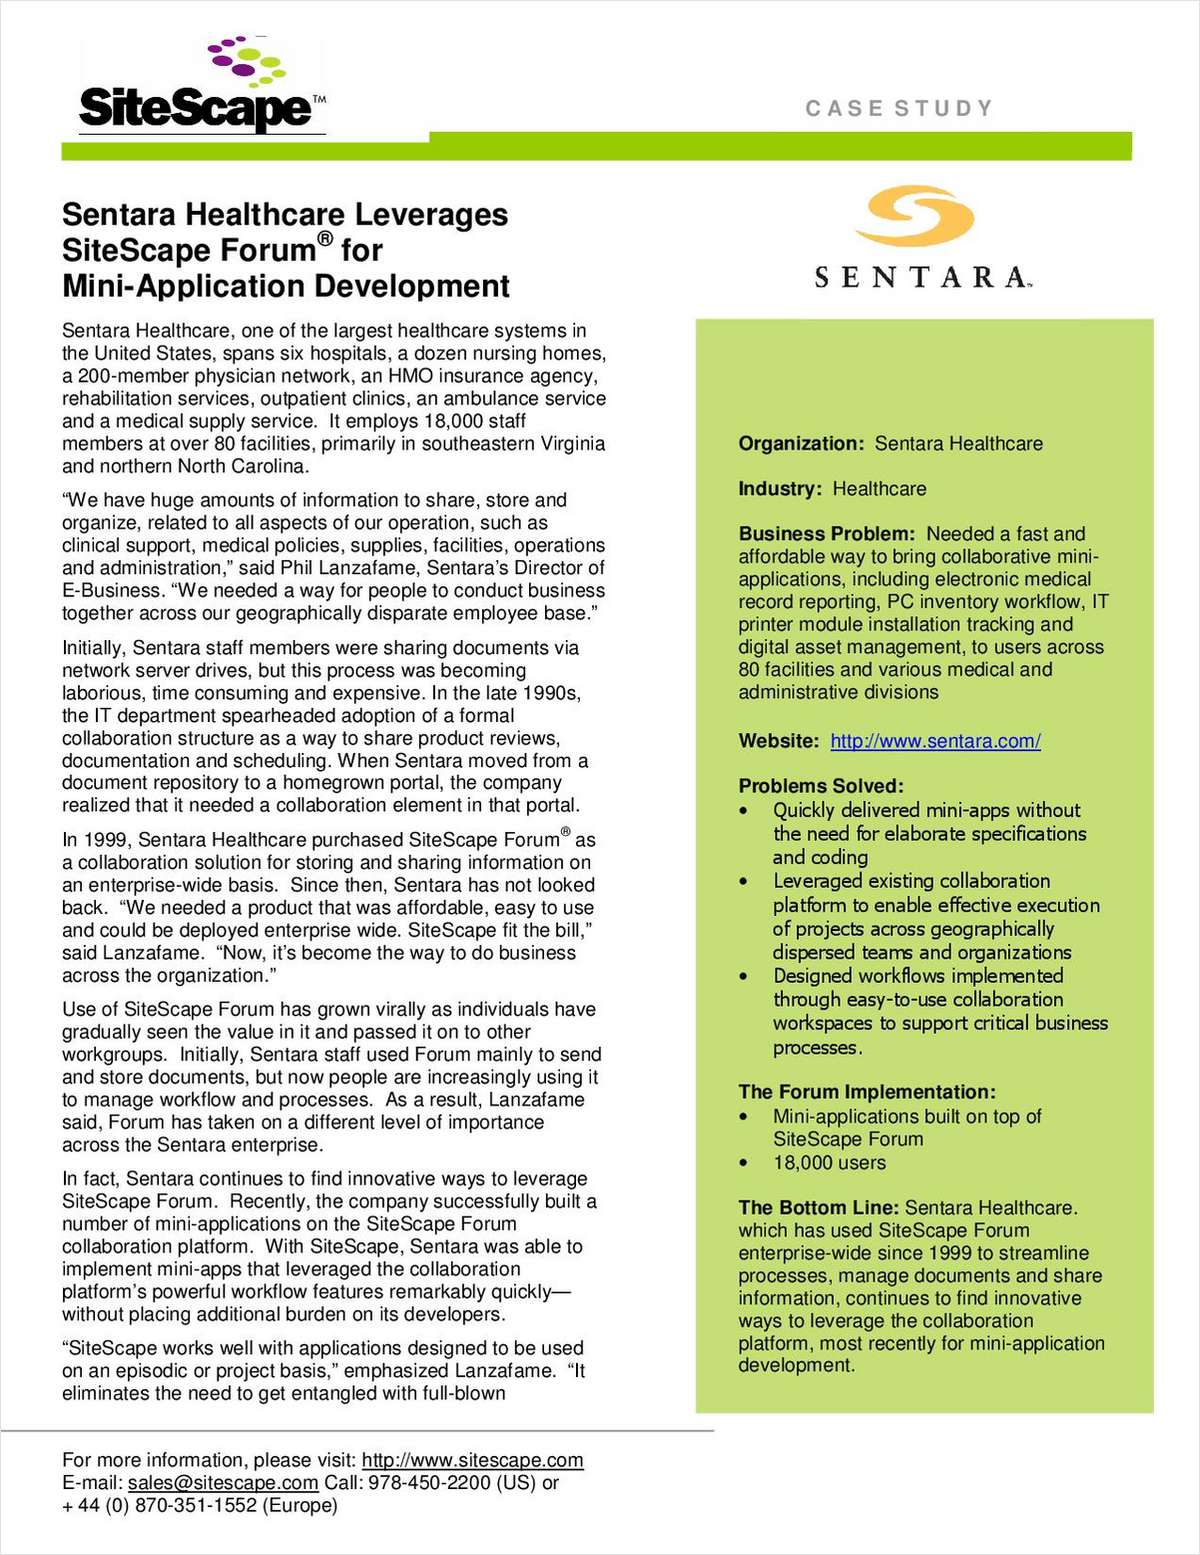 Sentara Healthcare Leverages SiteScape Forum for Mini-Application Development